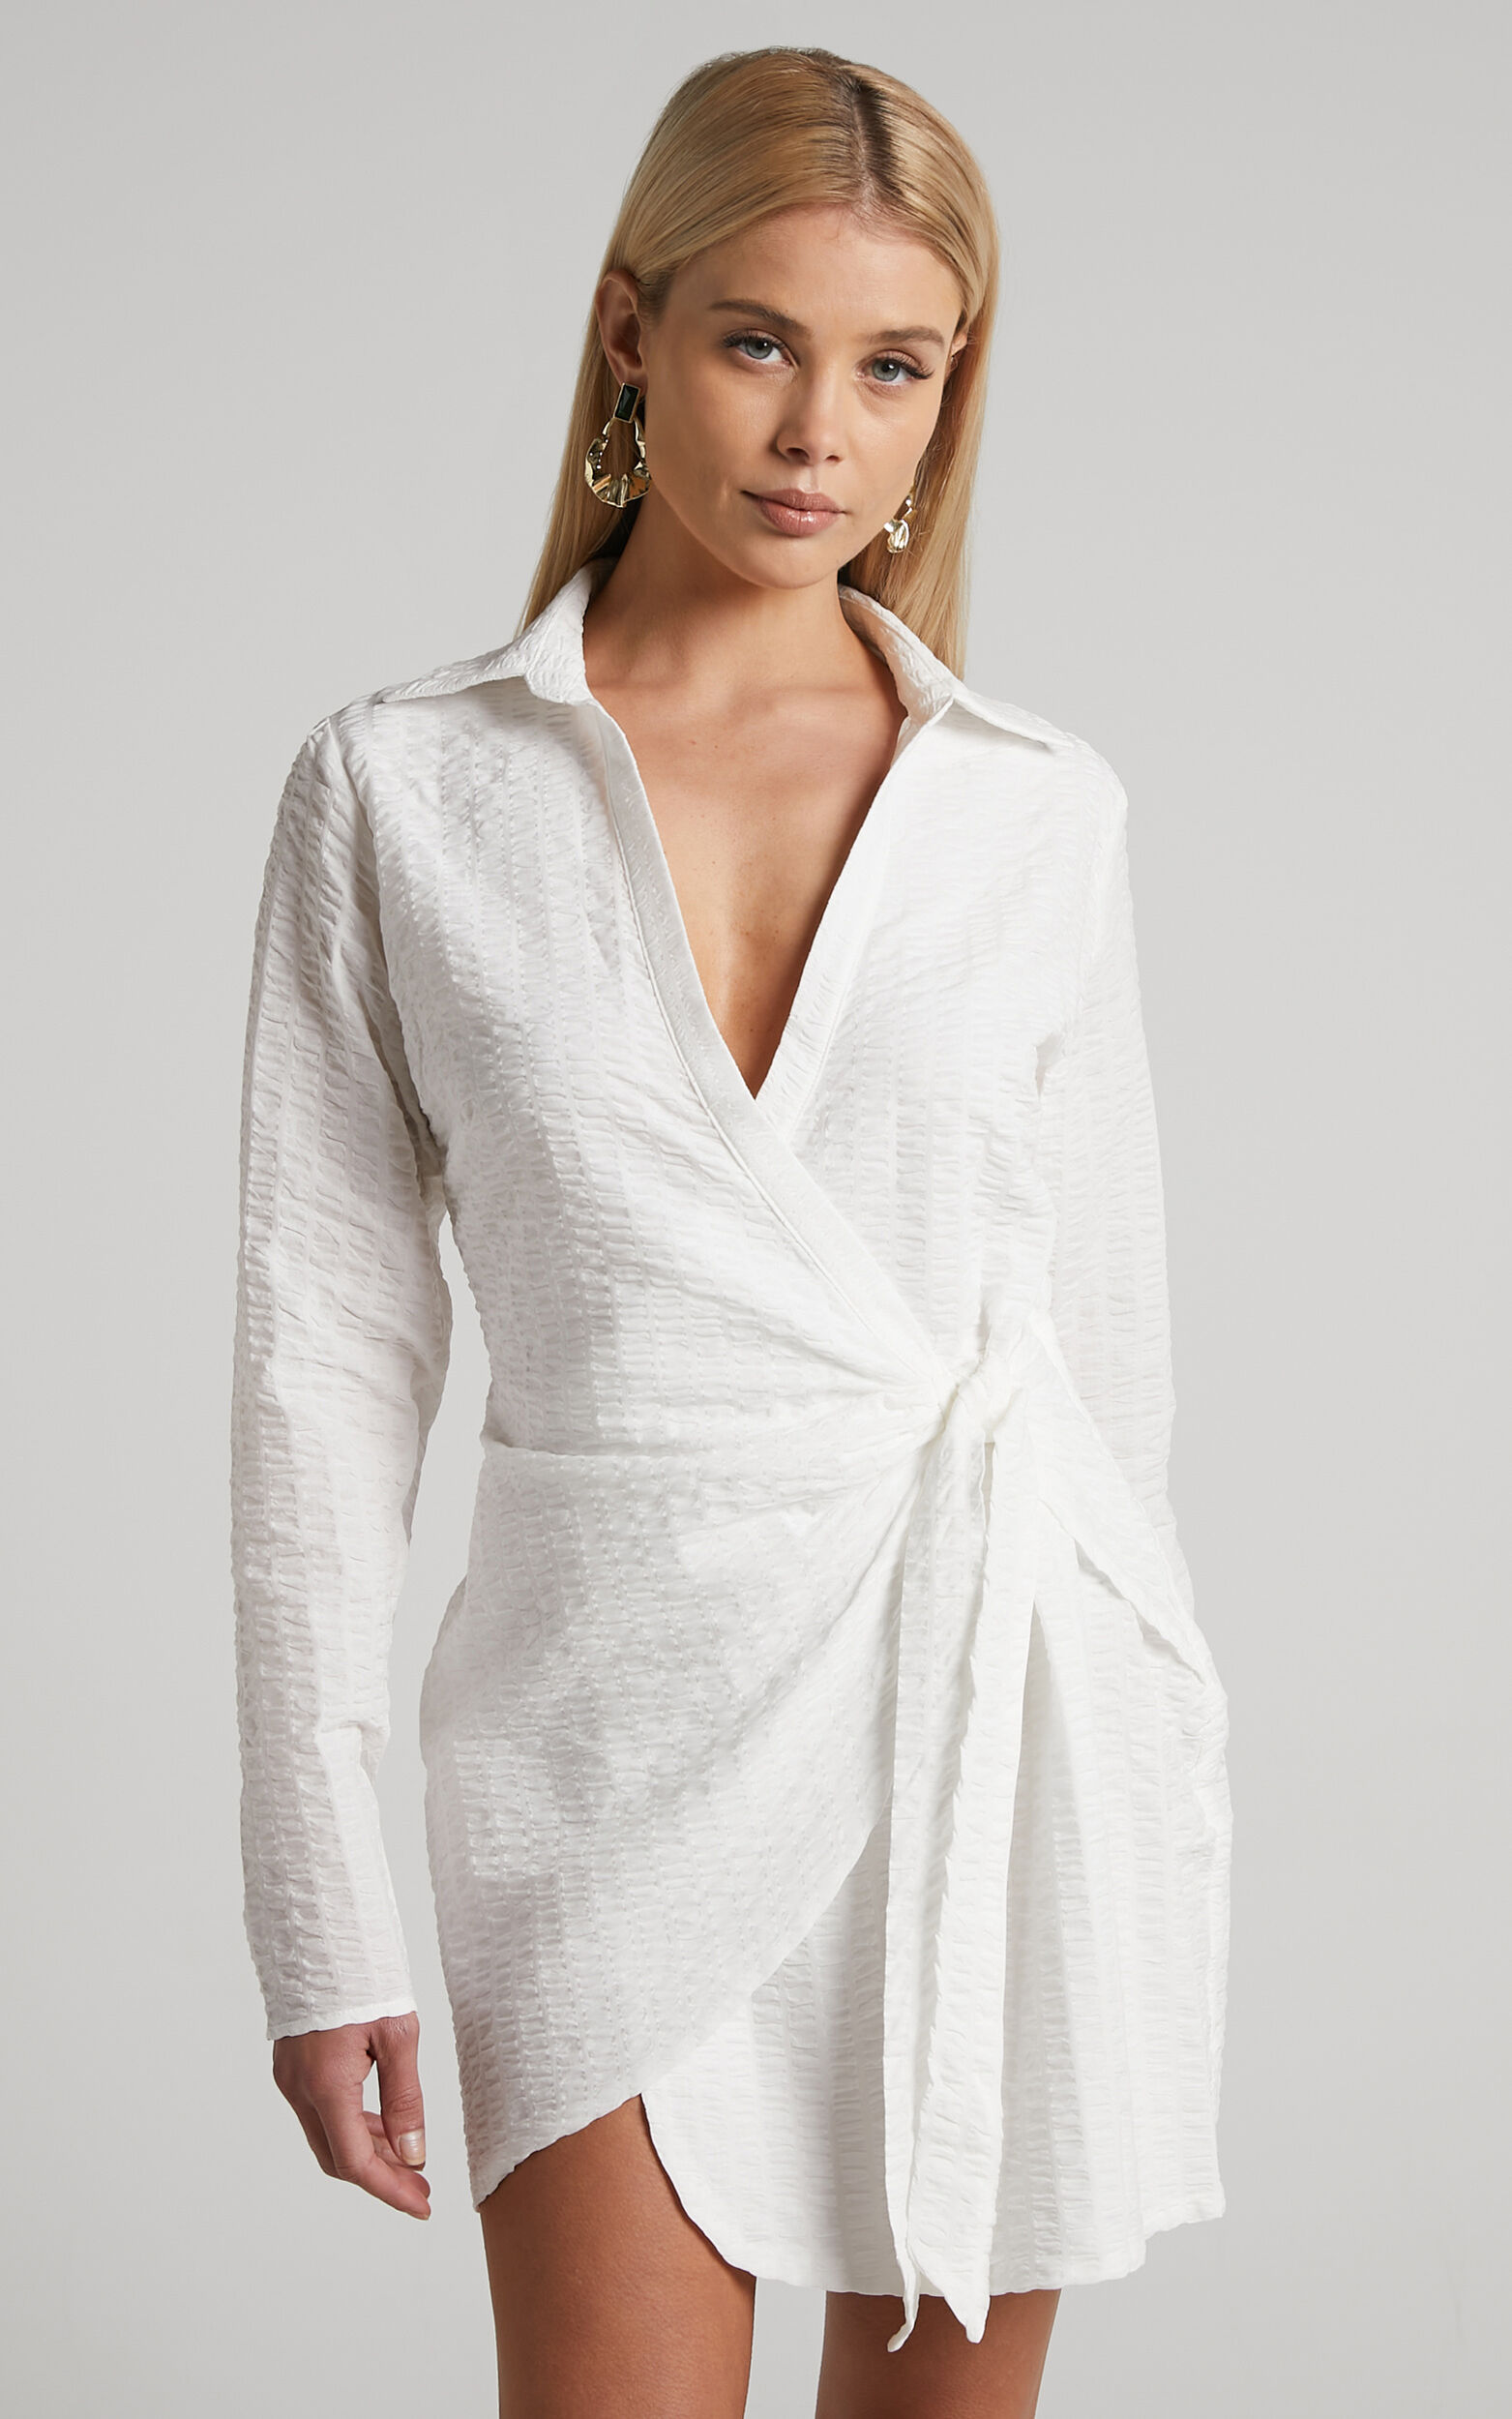 Rayfa Mini Dress - Long Sleeve Textured Wrap Dress in White - 06, WHT1